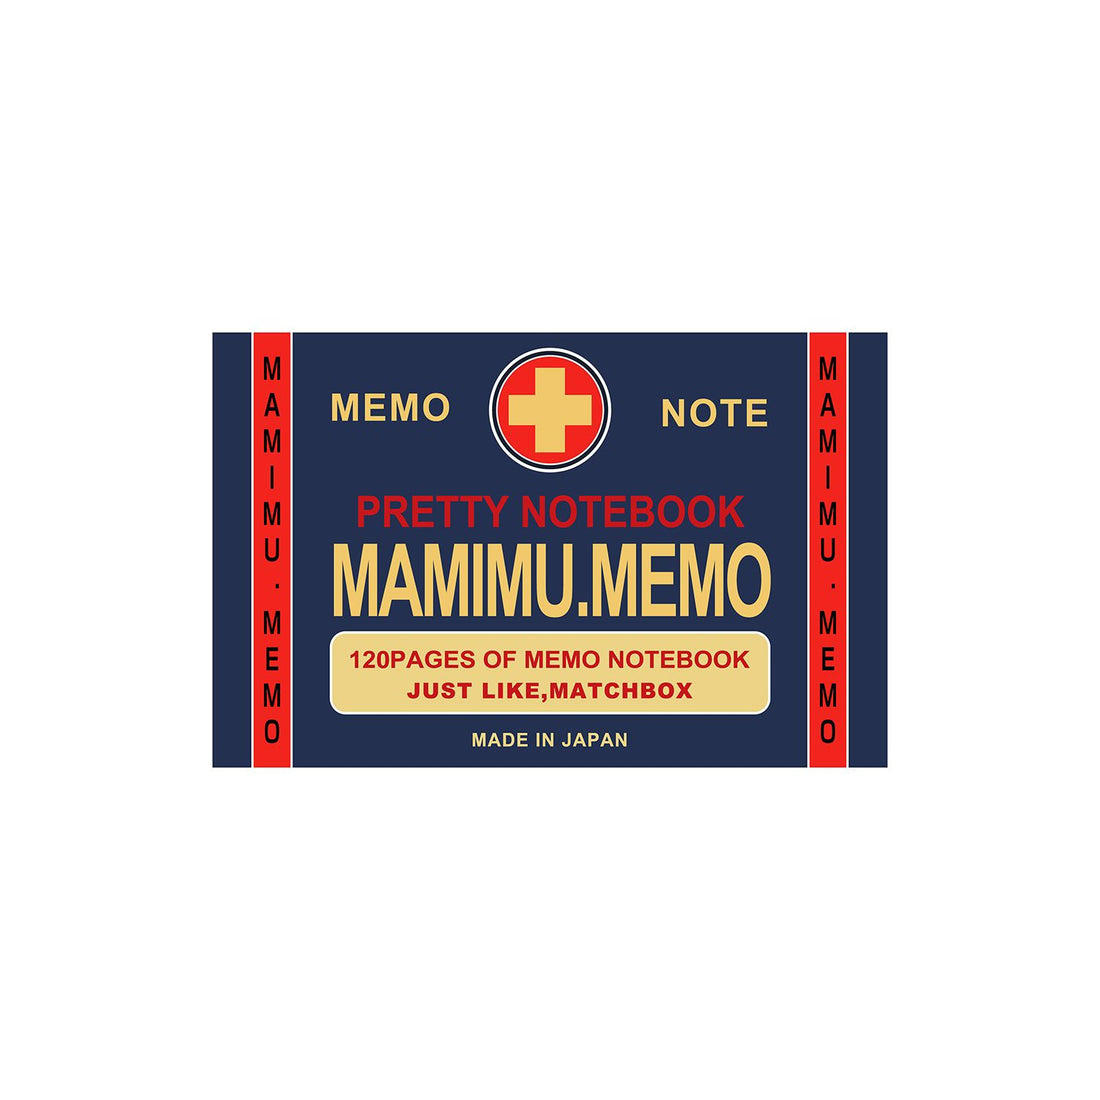 Shunkoen Mamimu American Vintage Matchbox Design Mini Memo Notebook | Ten Designs Pretty Notebook with Cross